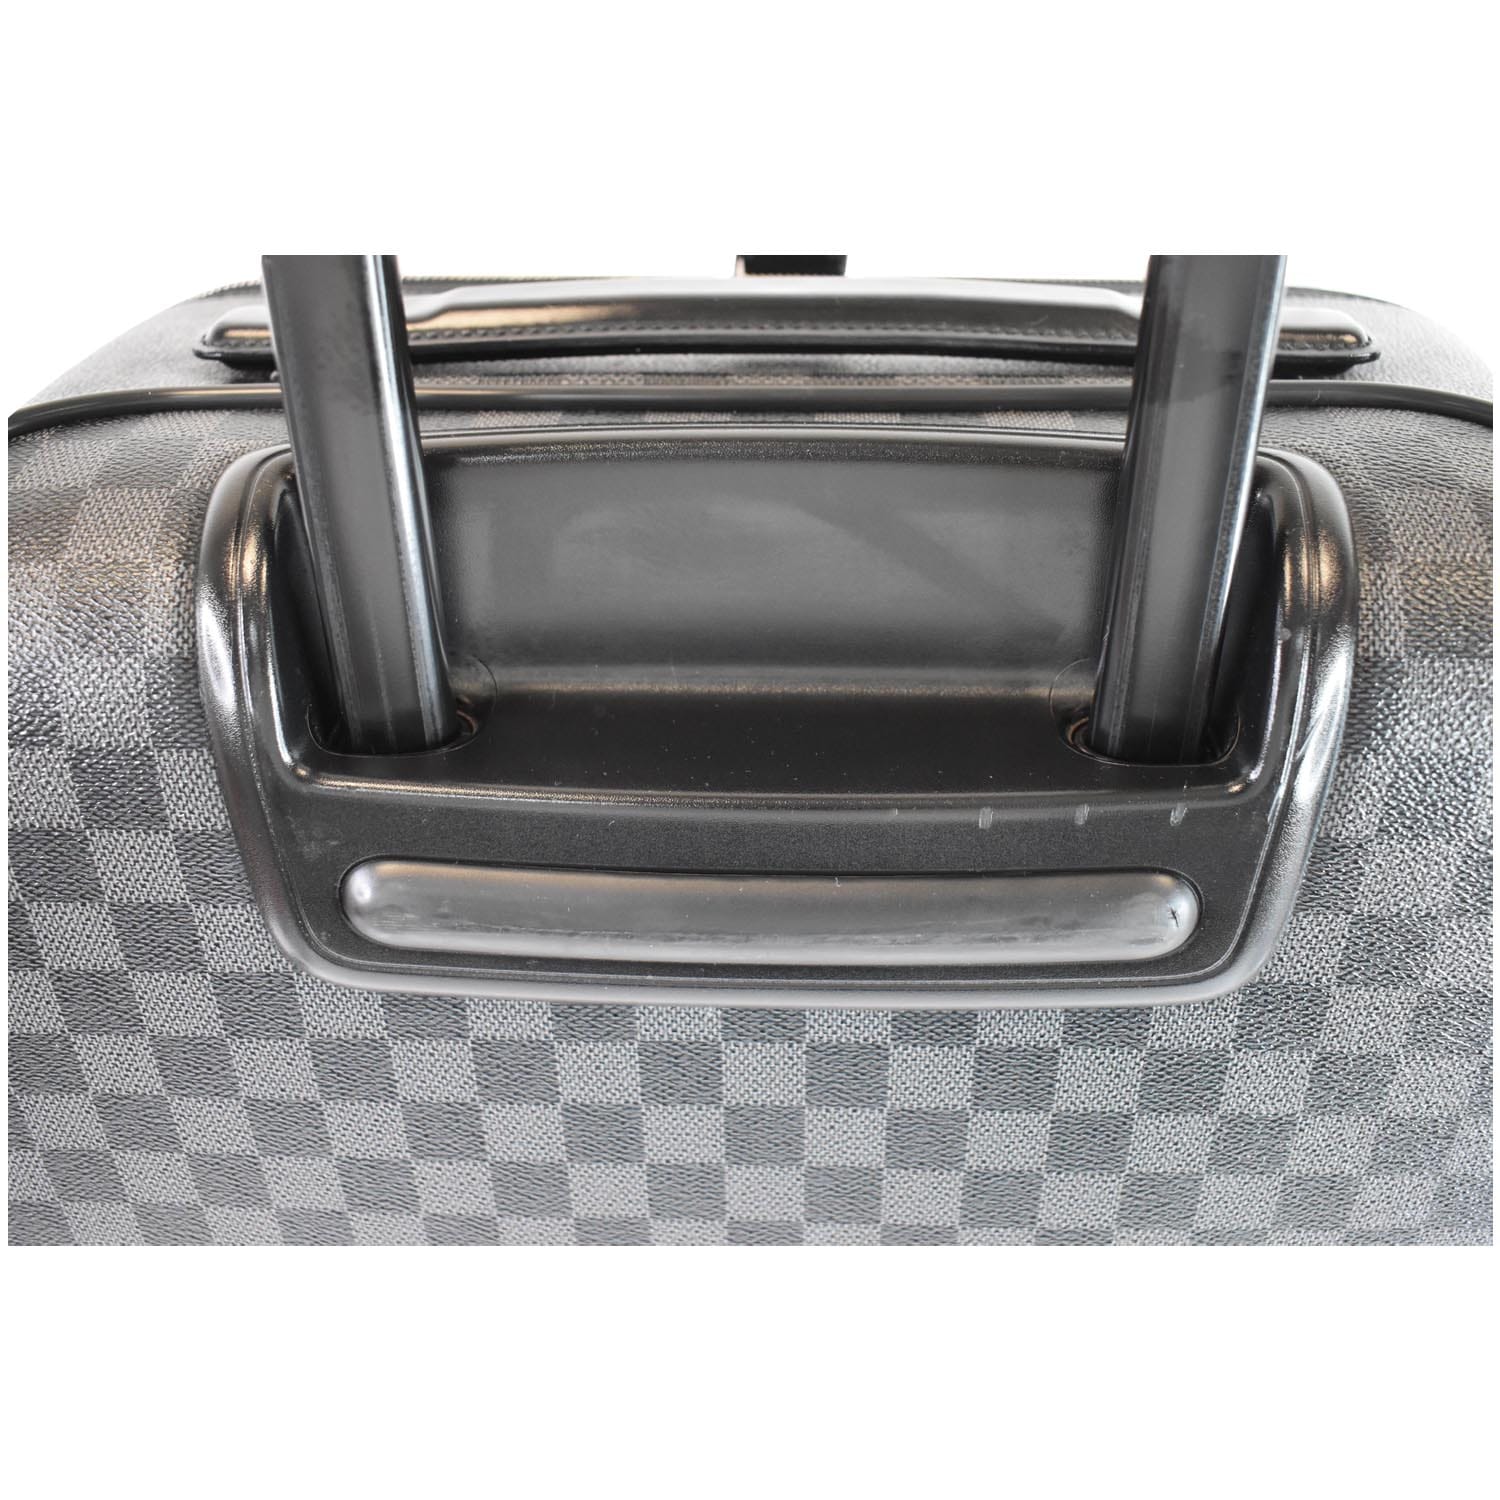 Louis Vuitton Pegase 55 Damier Graphite Suitcase Bag